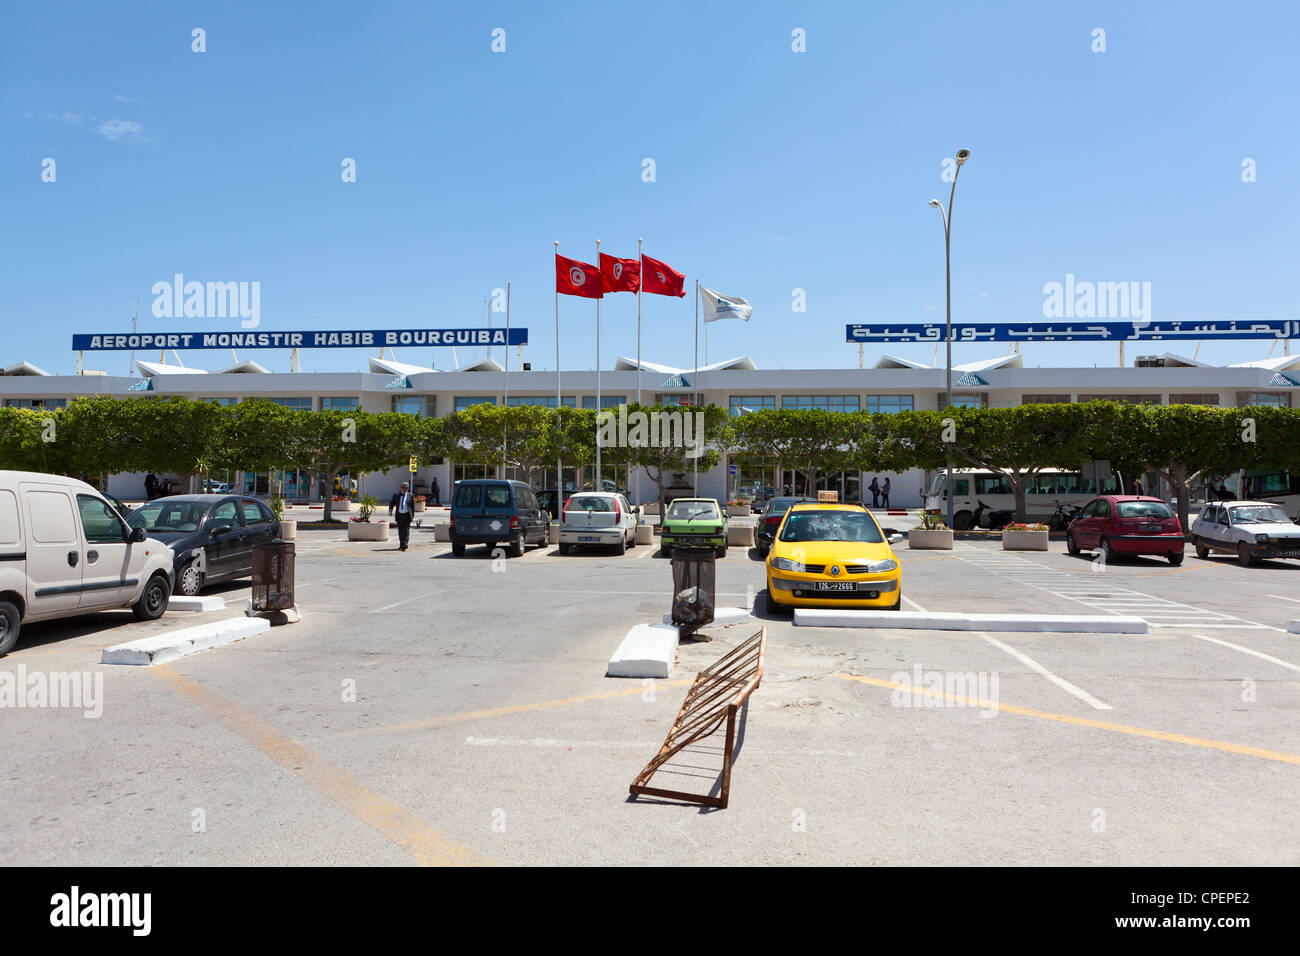 Habib Bourguiba International airport in Monastir, Tunisia. Parking with cars Stock Photo